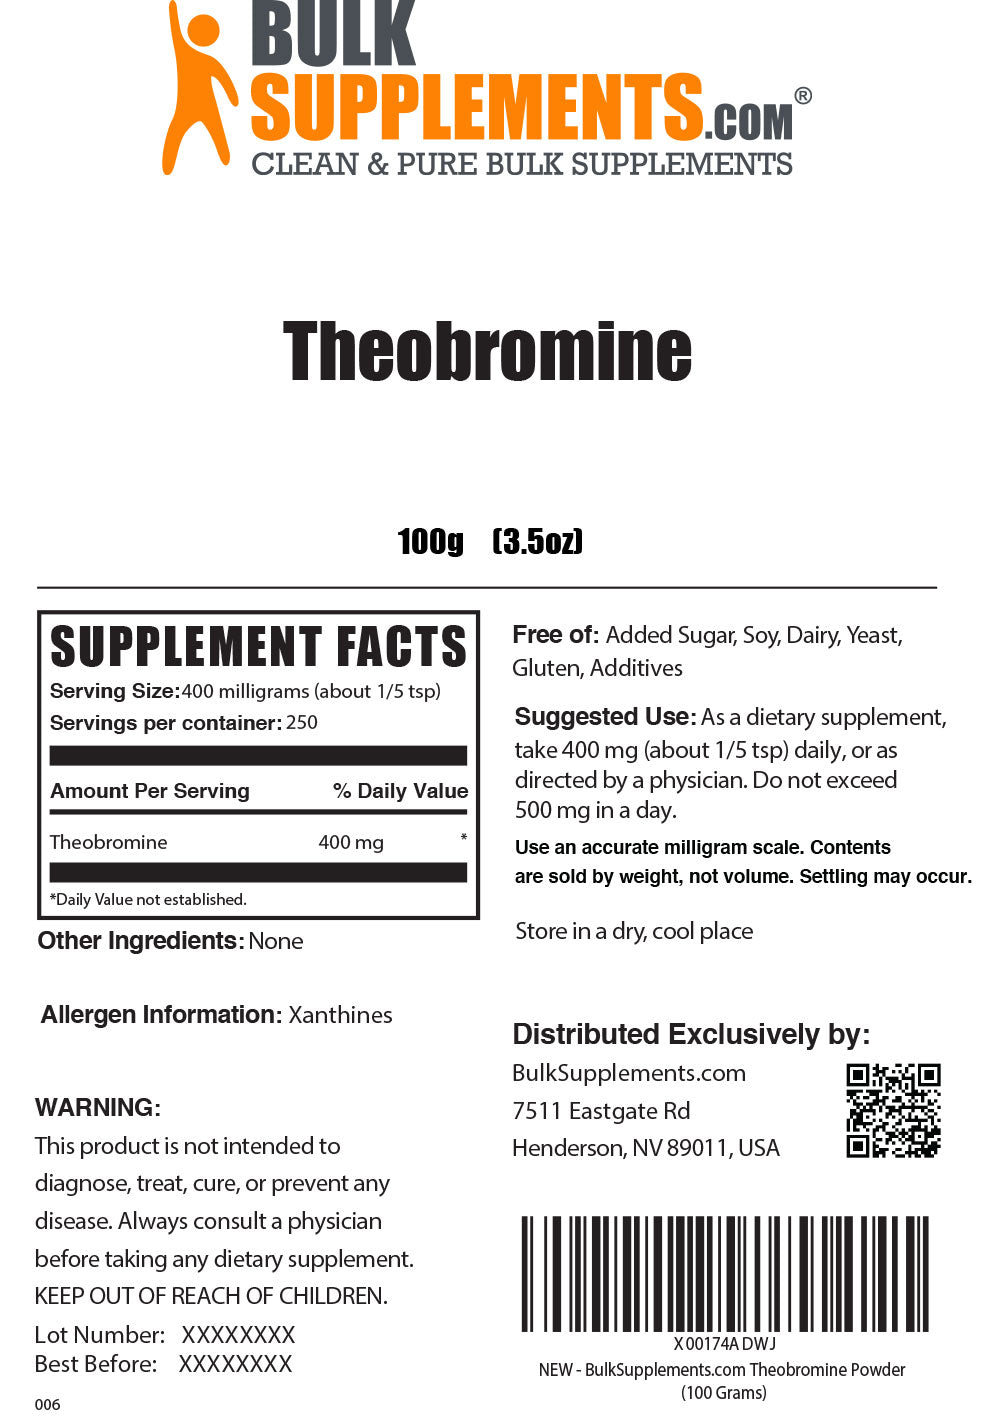 Theobromine powder label 100g